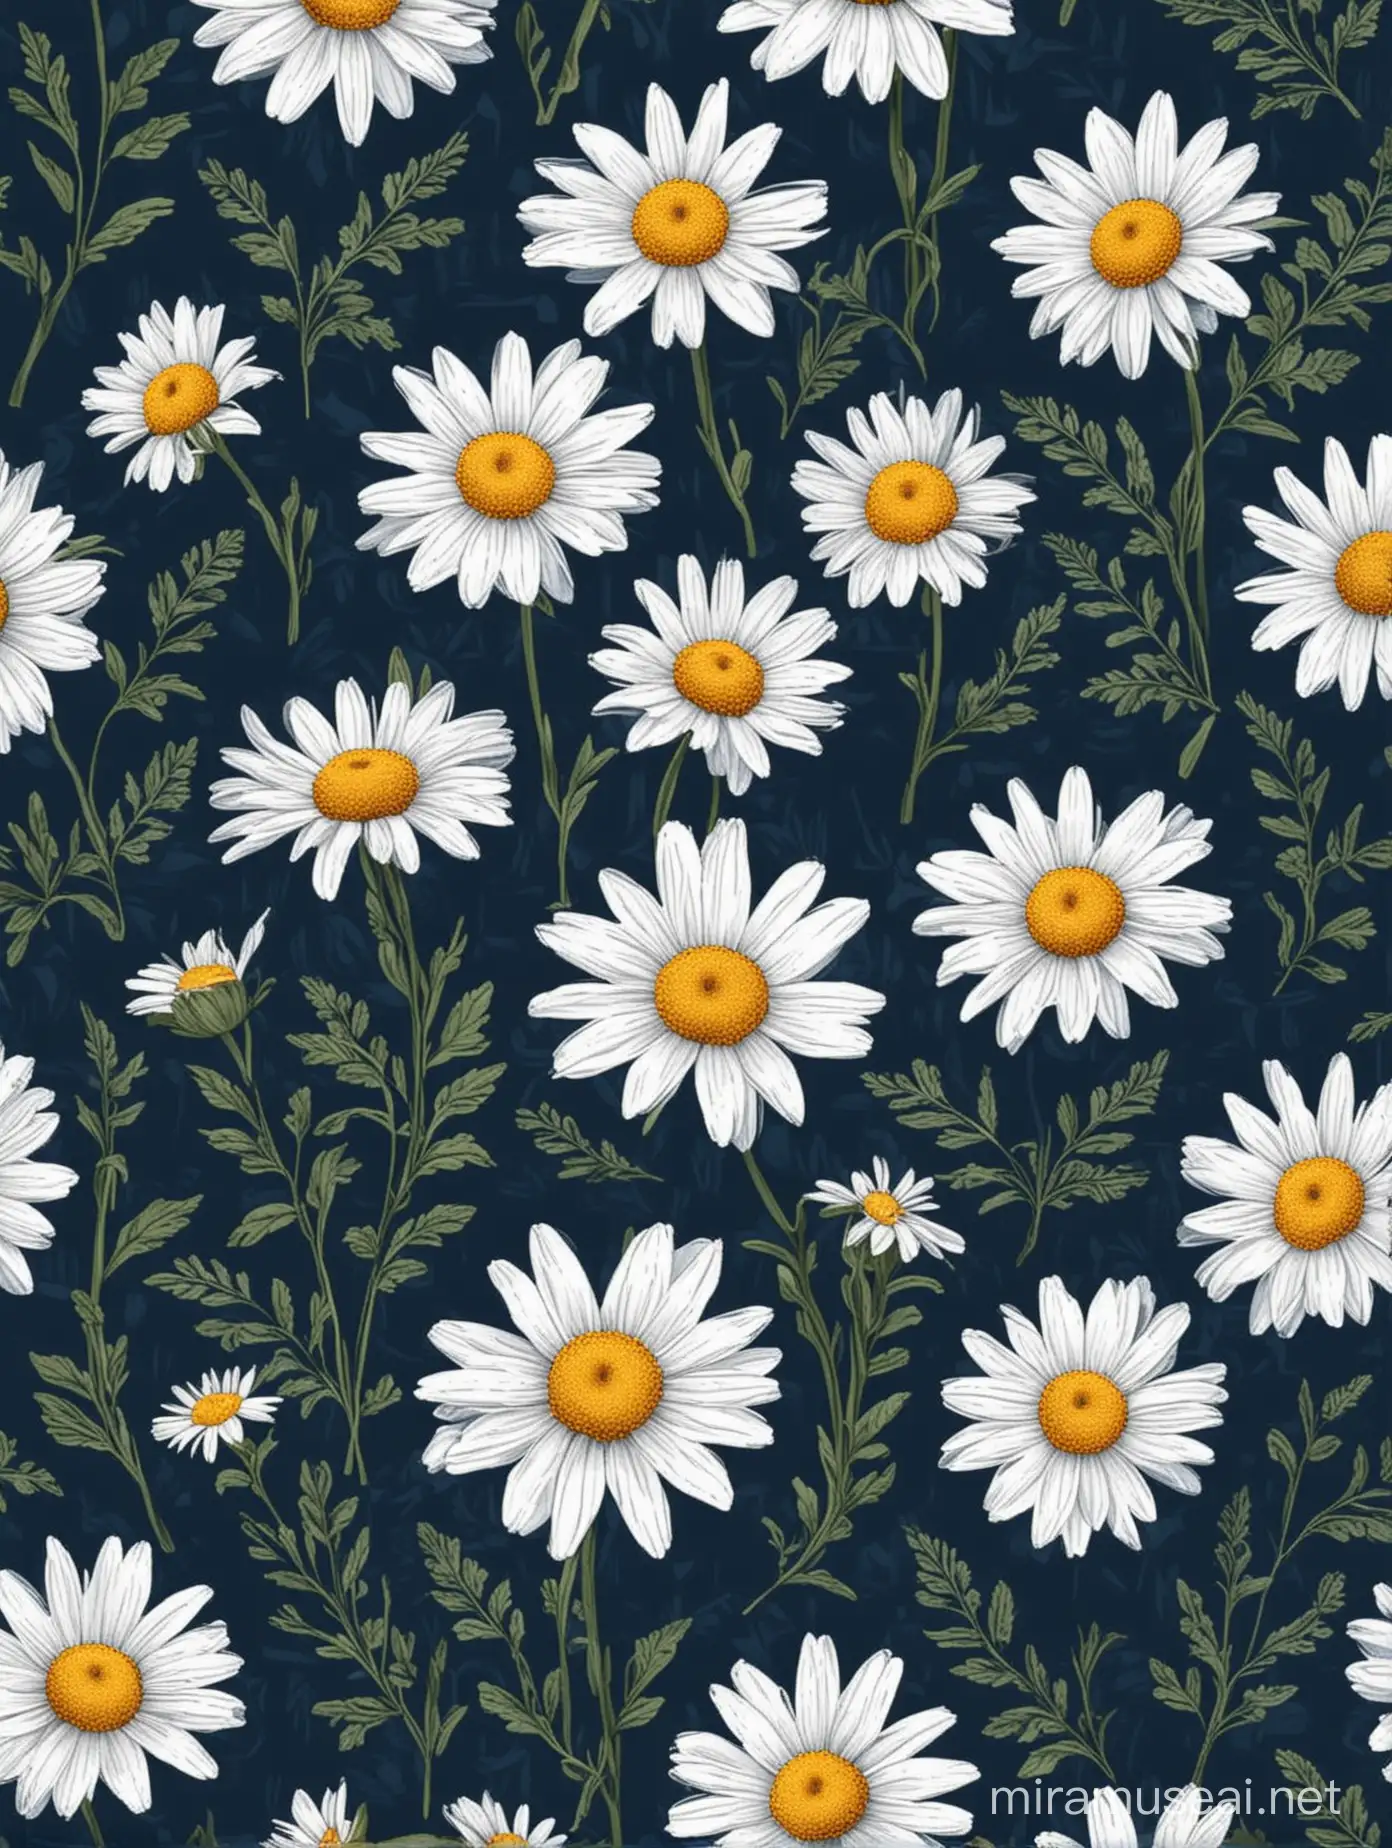 natural daisy blue wild 1 flower botanical seamless pattern vector illustration dark blue background